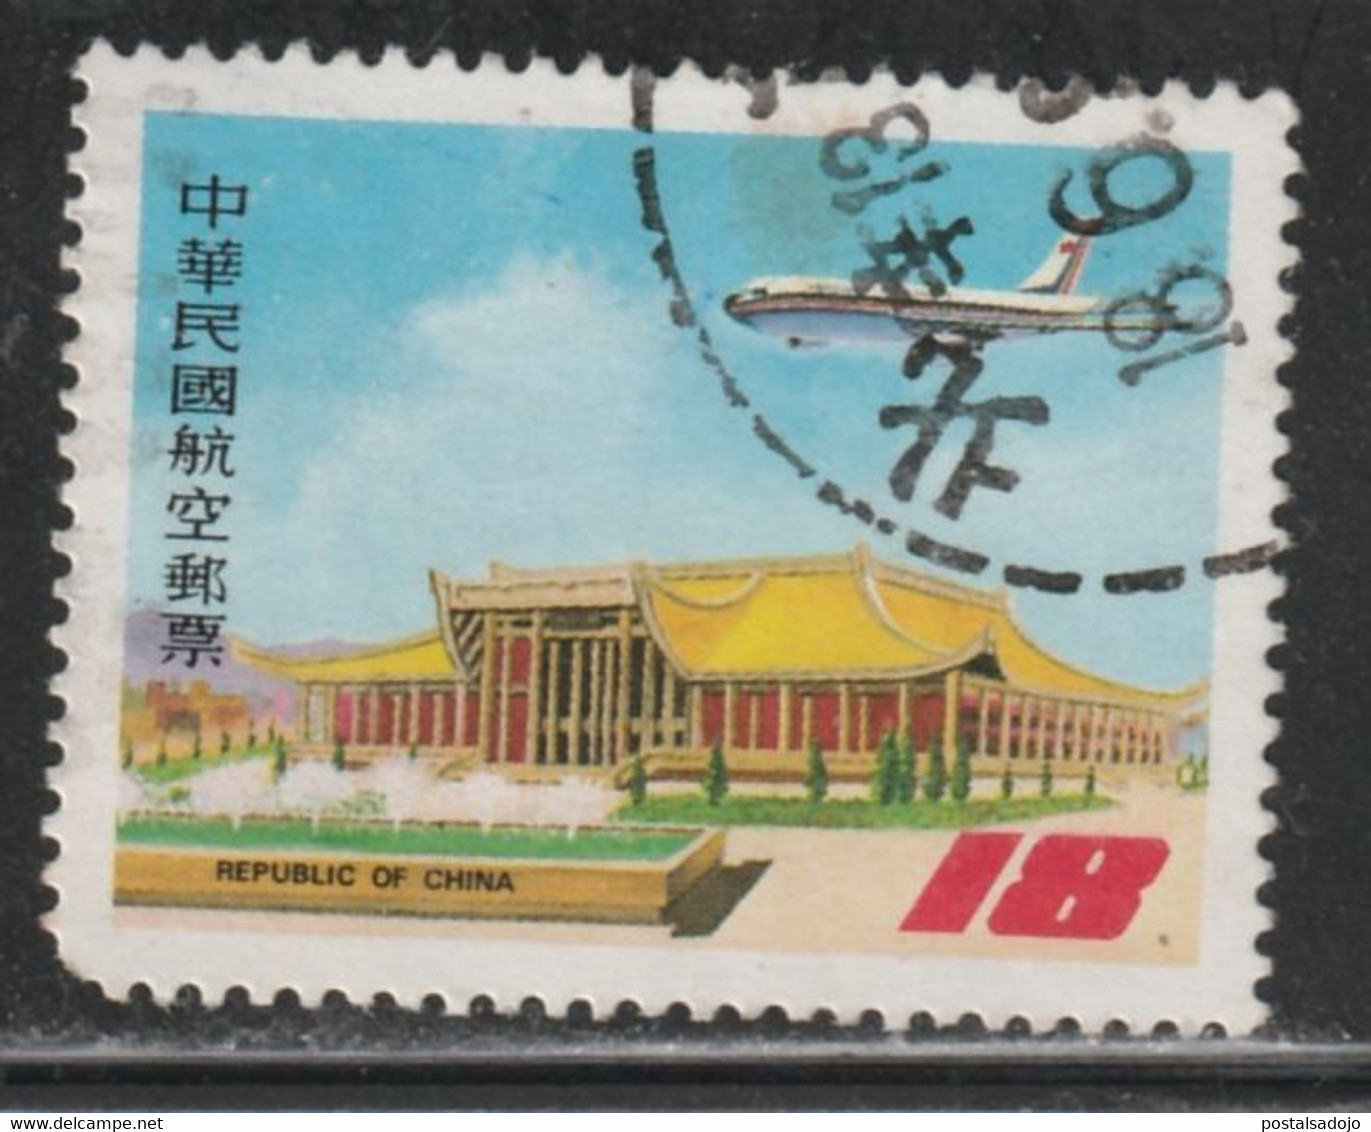 TAIWAN 205 // YVERT 73 (aérien) // 1984 - Luftpost